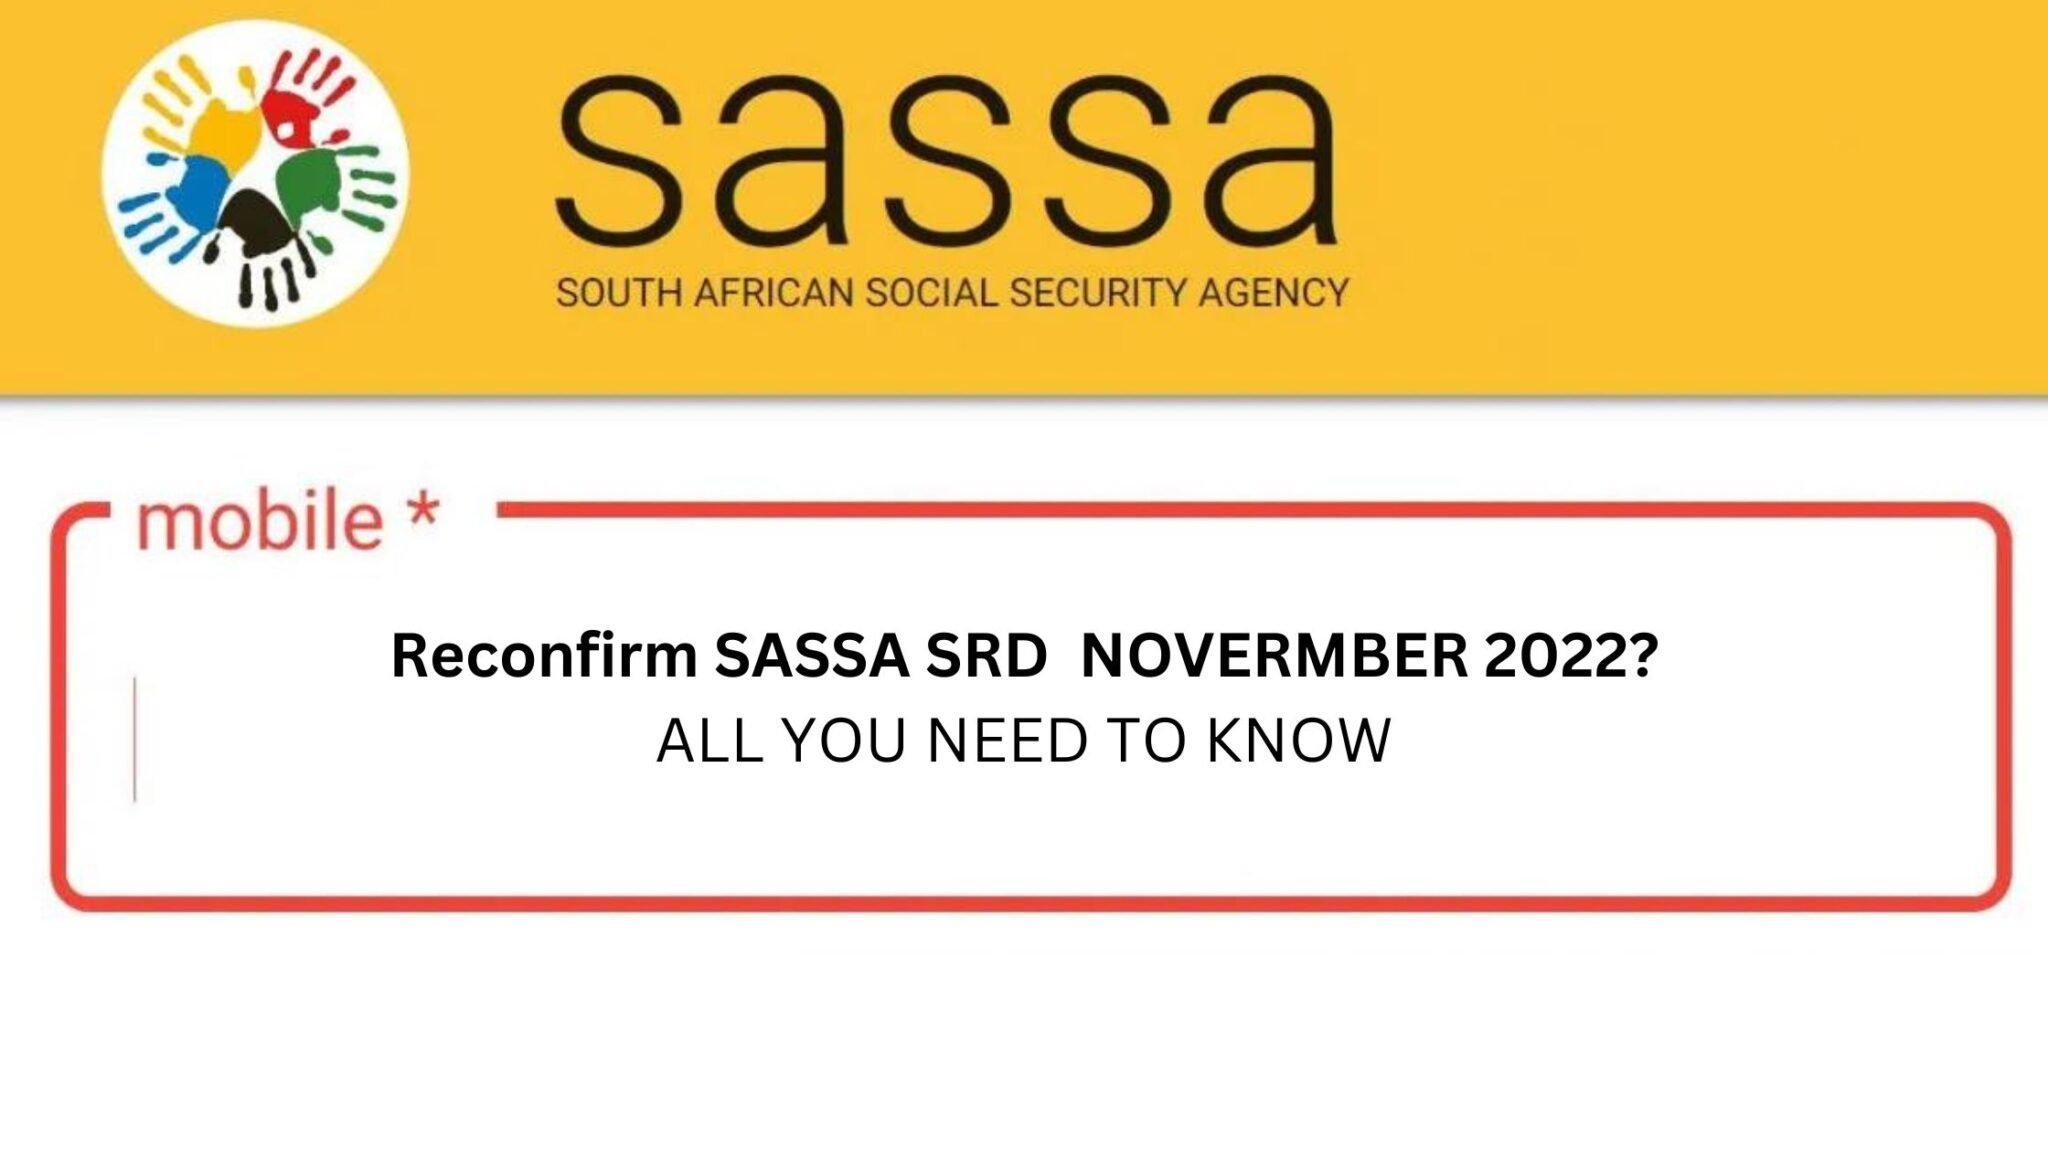 sassa.reconfirm